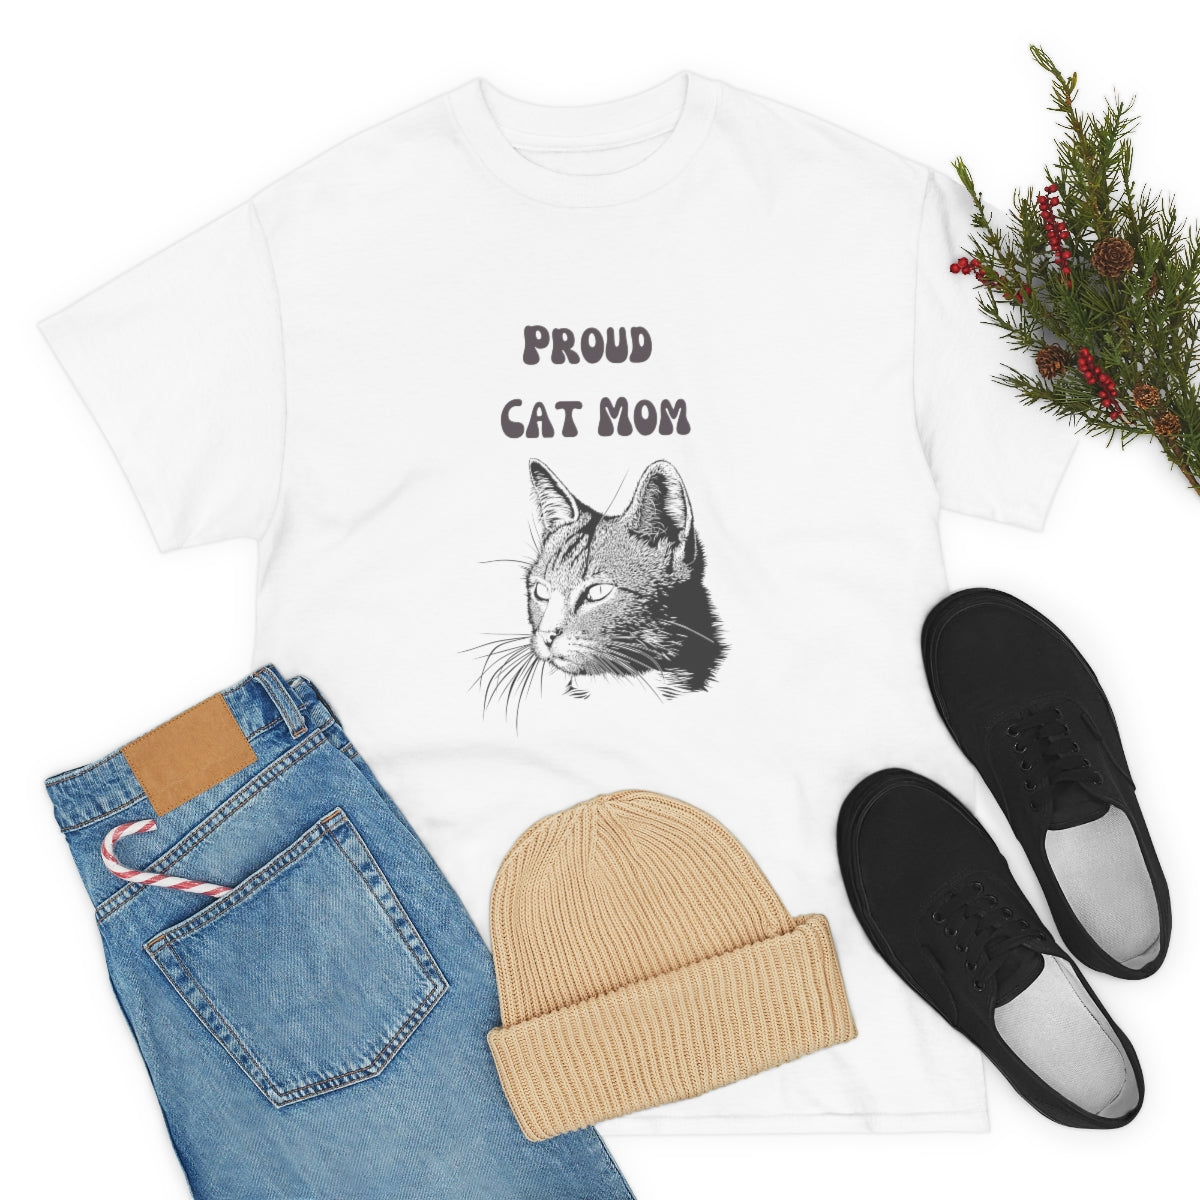 Proud Cat Mom Shirt, Cat Mom,  Funny Tshirt, Cat Owner Shirt, Cat Lover Tshirt, Cat People Tee, Gift for Cat Mom, Fur Mom Shirt, Fur Mom, - The Good Life Vibe